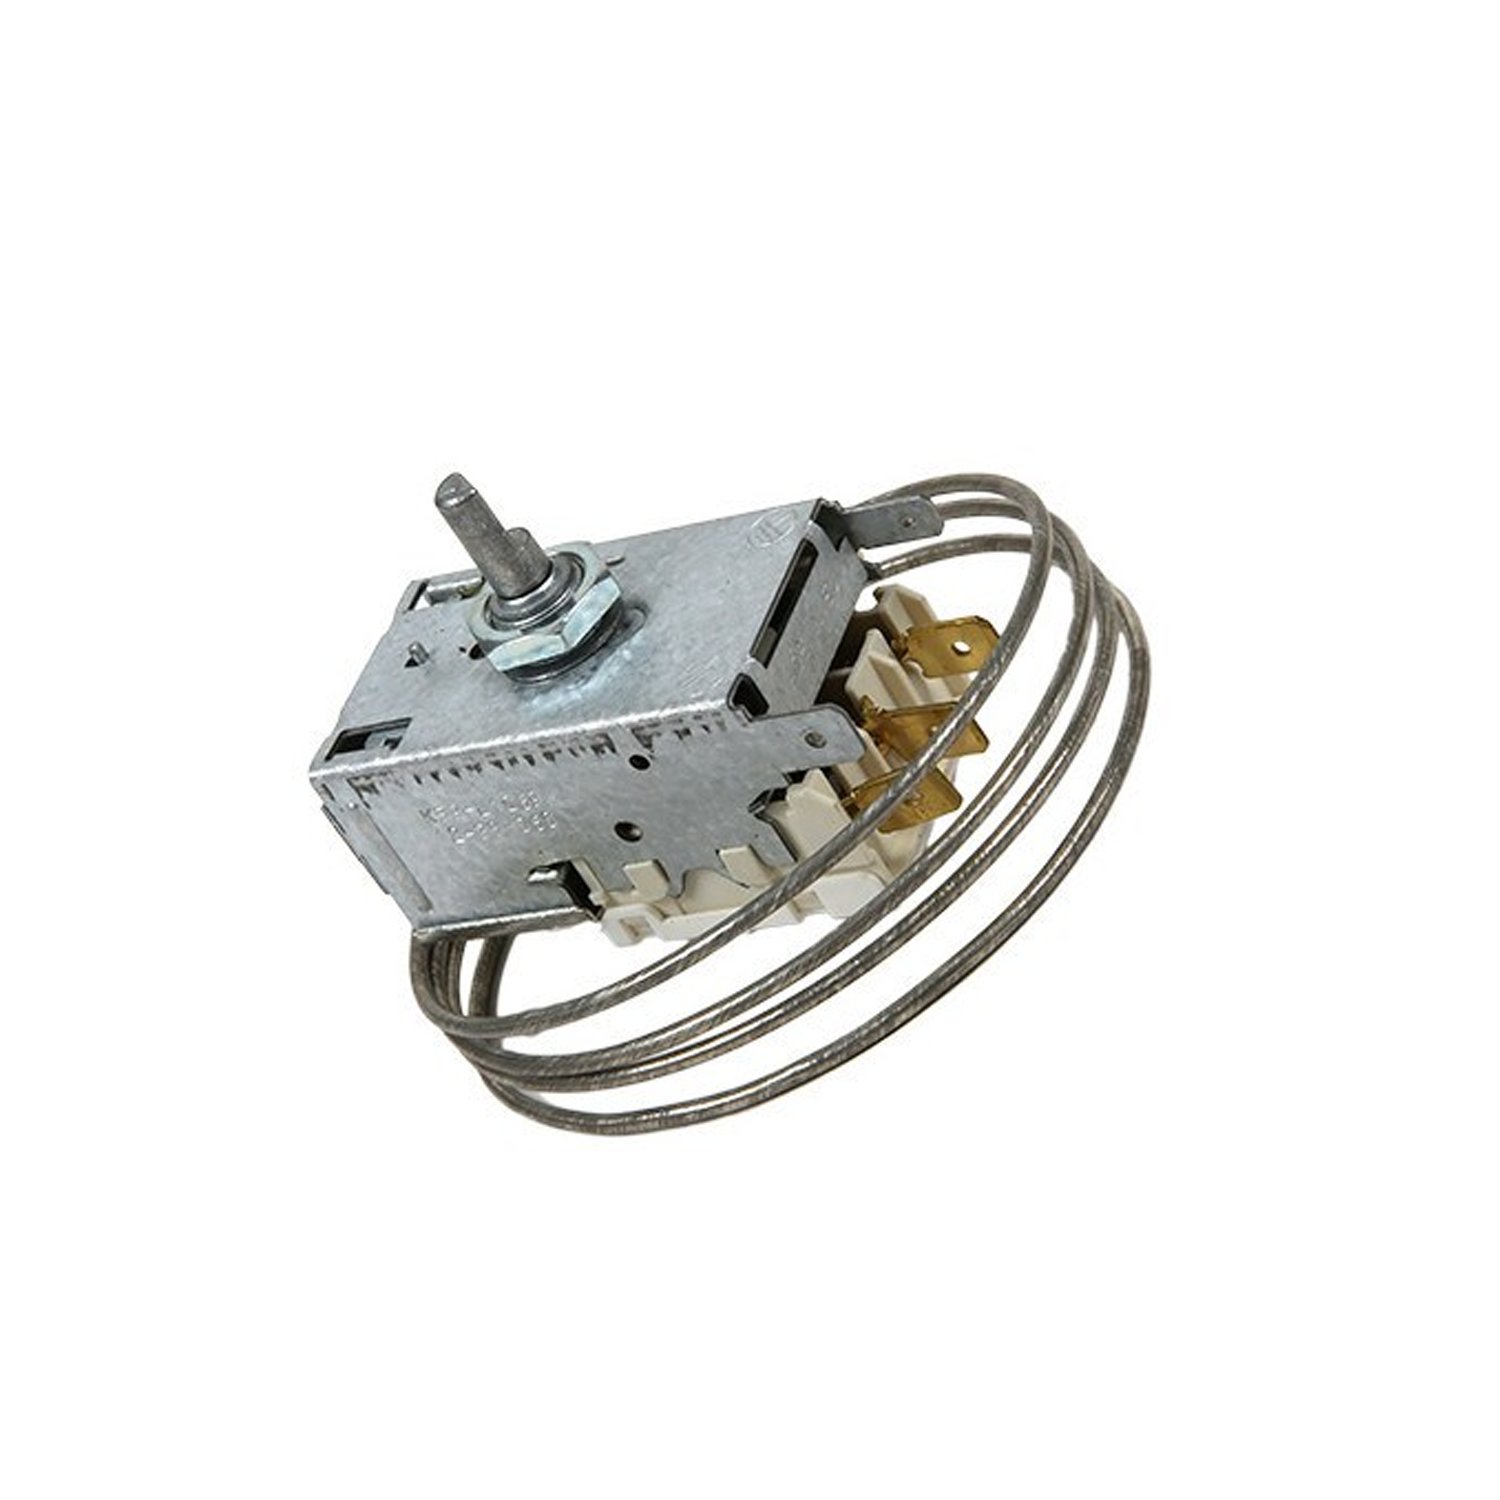 Thermostat Ranco K59-L1269 for refrigerator AEG 2262176122